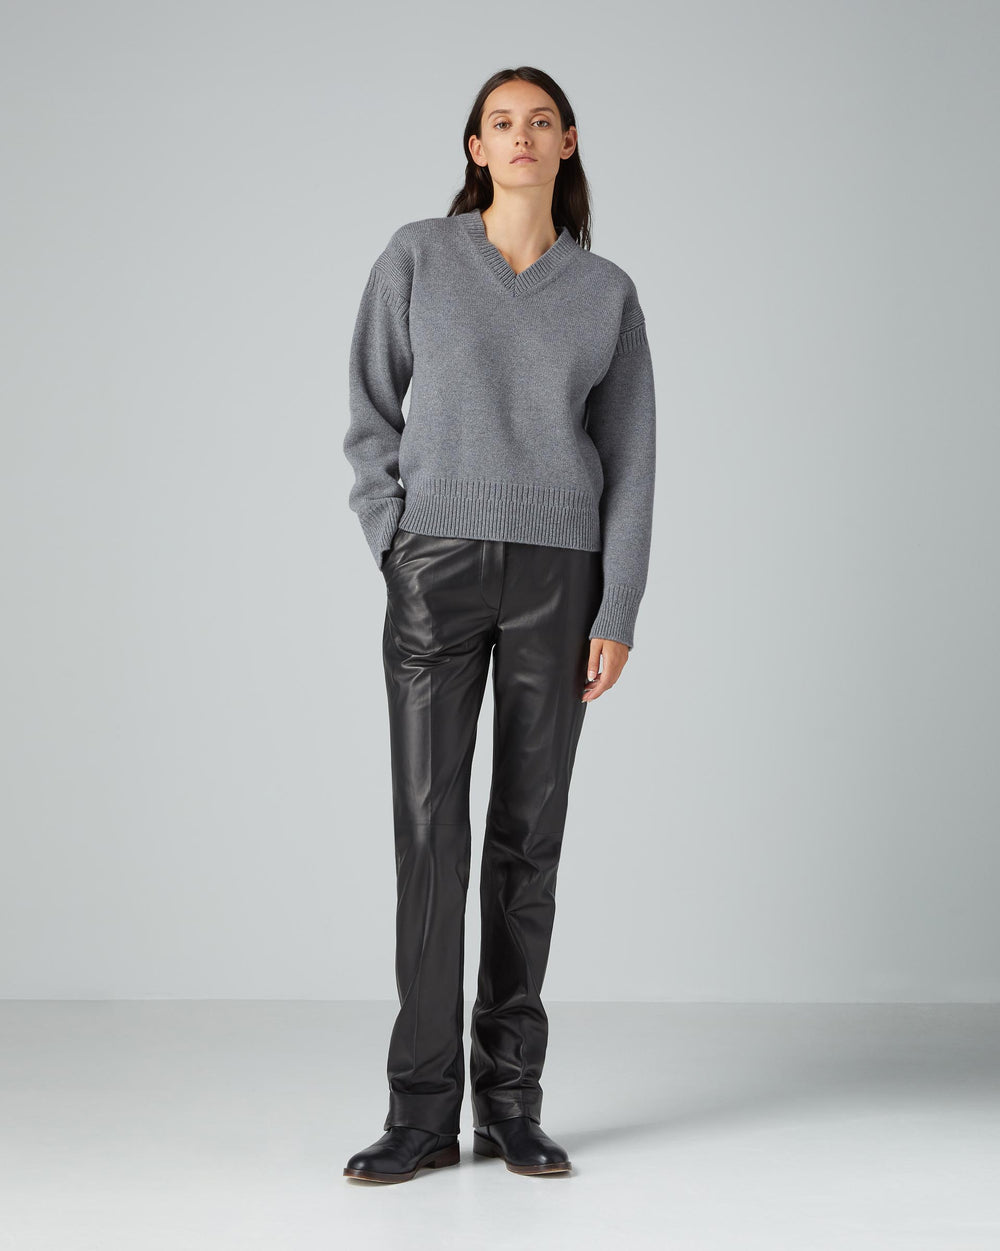 Poppy Sweater in Wool Cashmere, Grey Melange